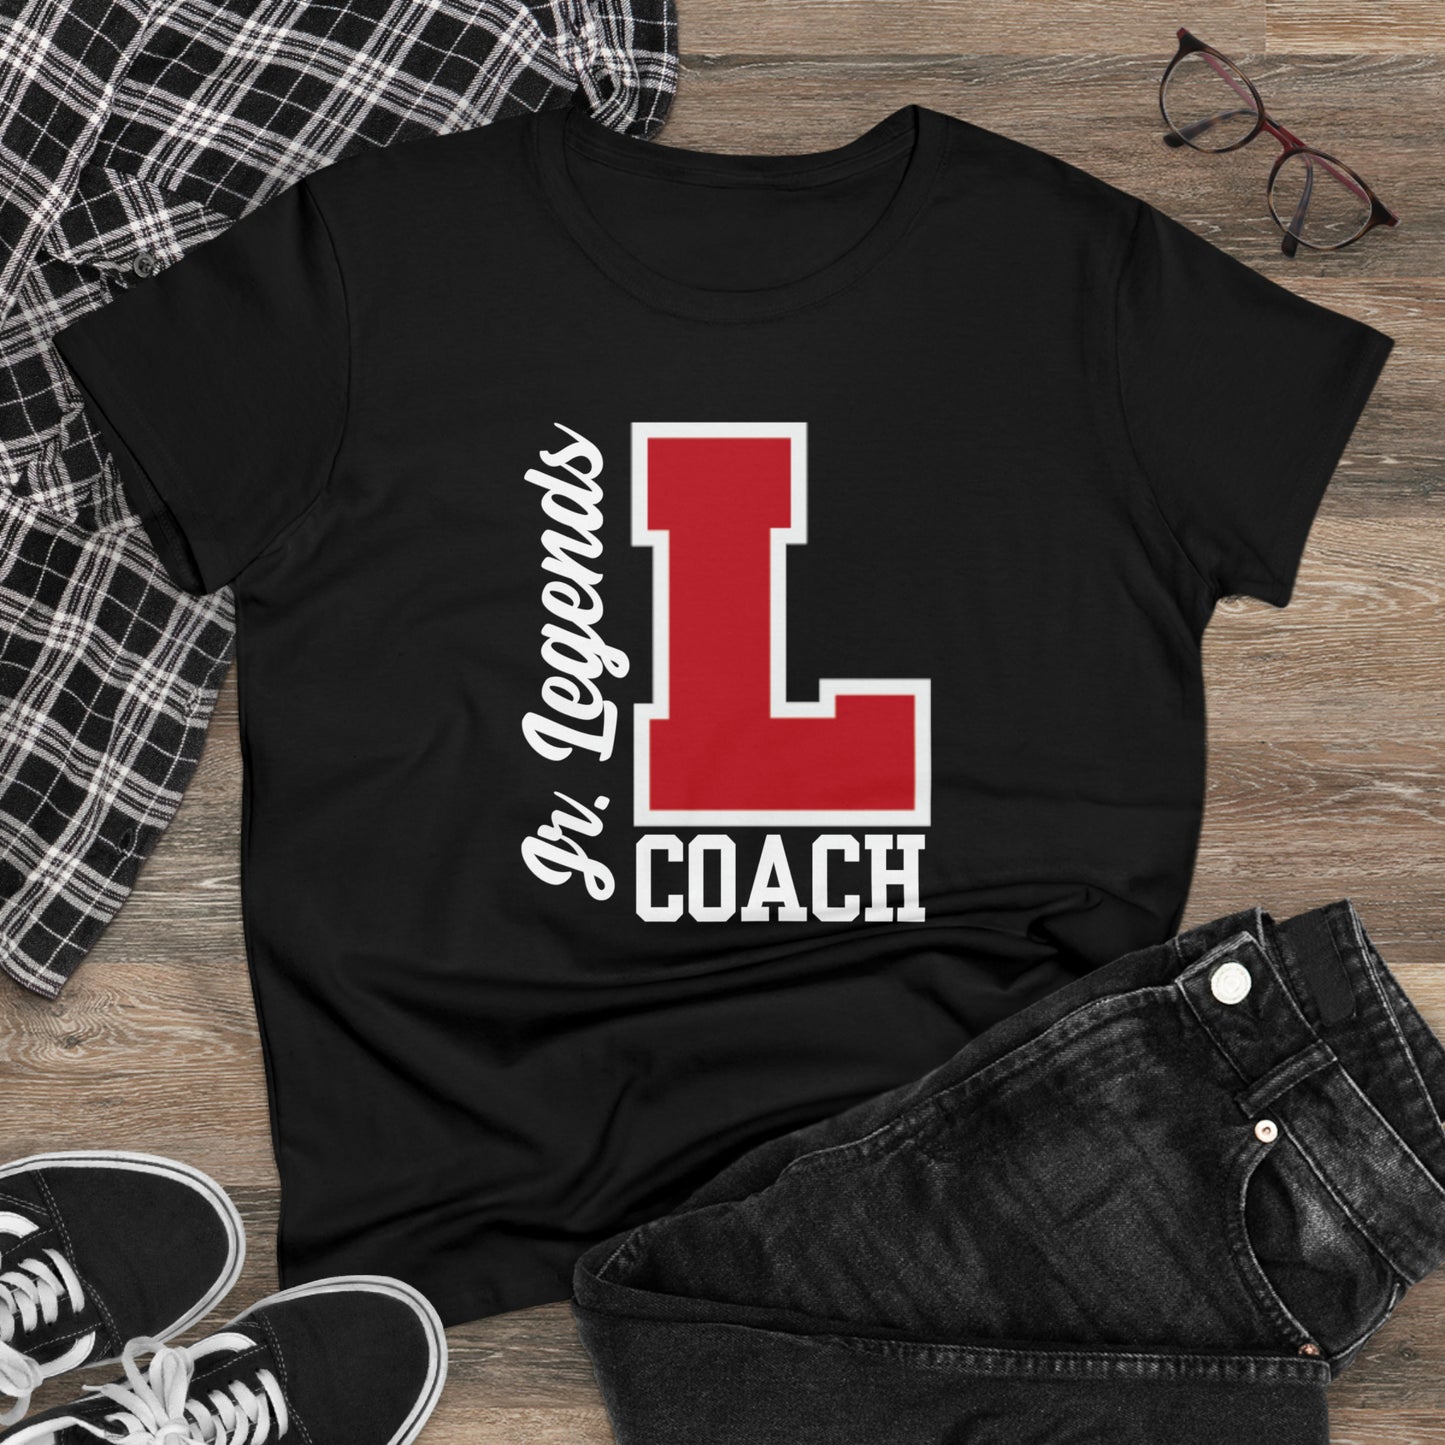 Lancaster Cheer Coach Women's Cotton Tee